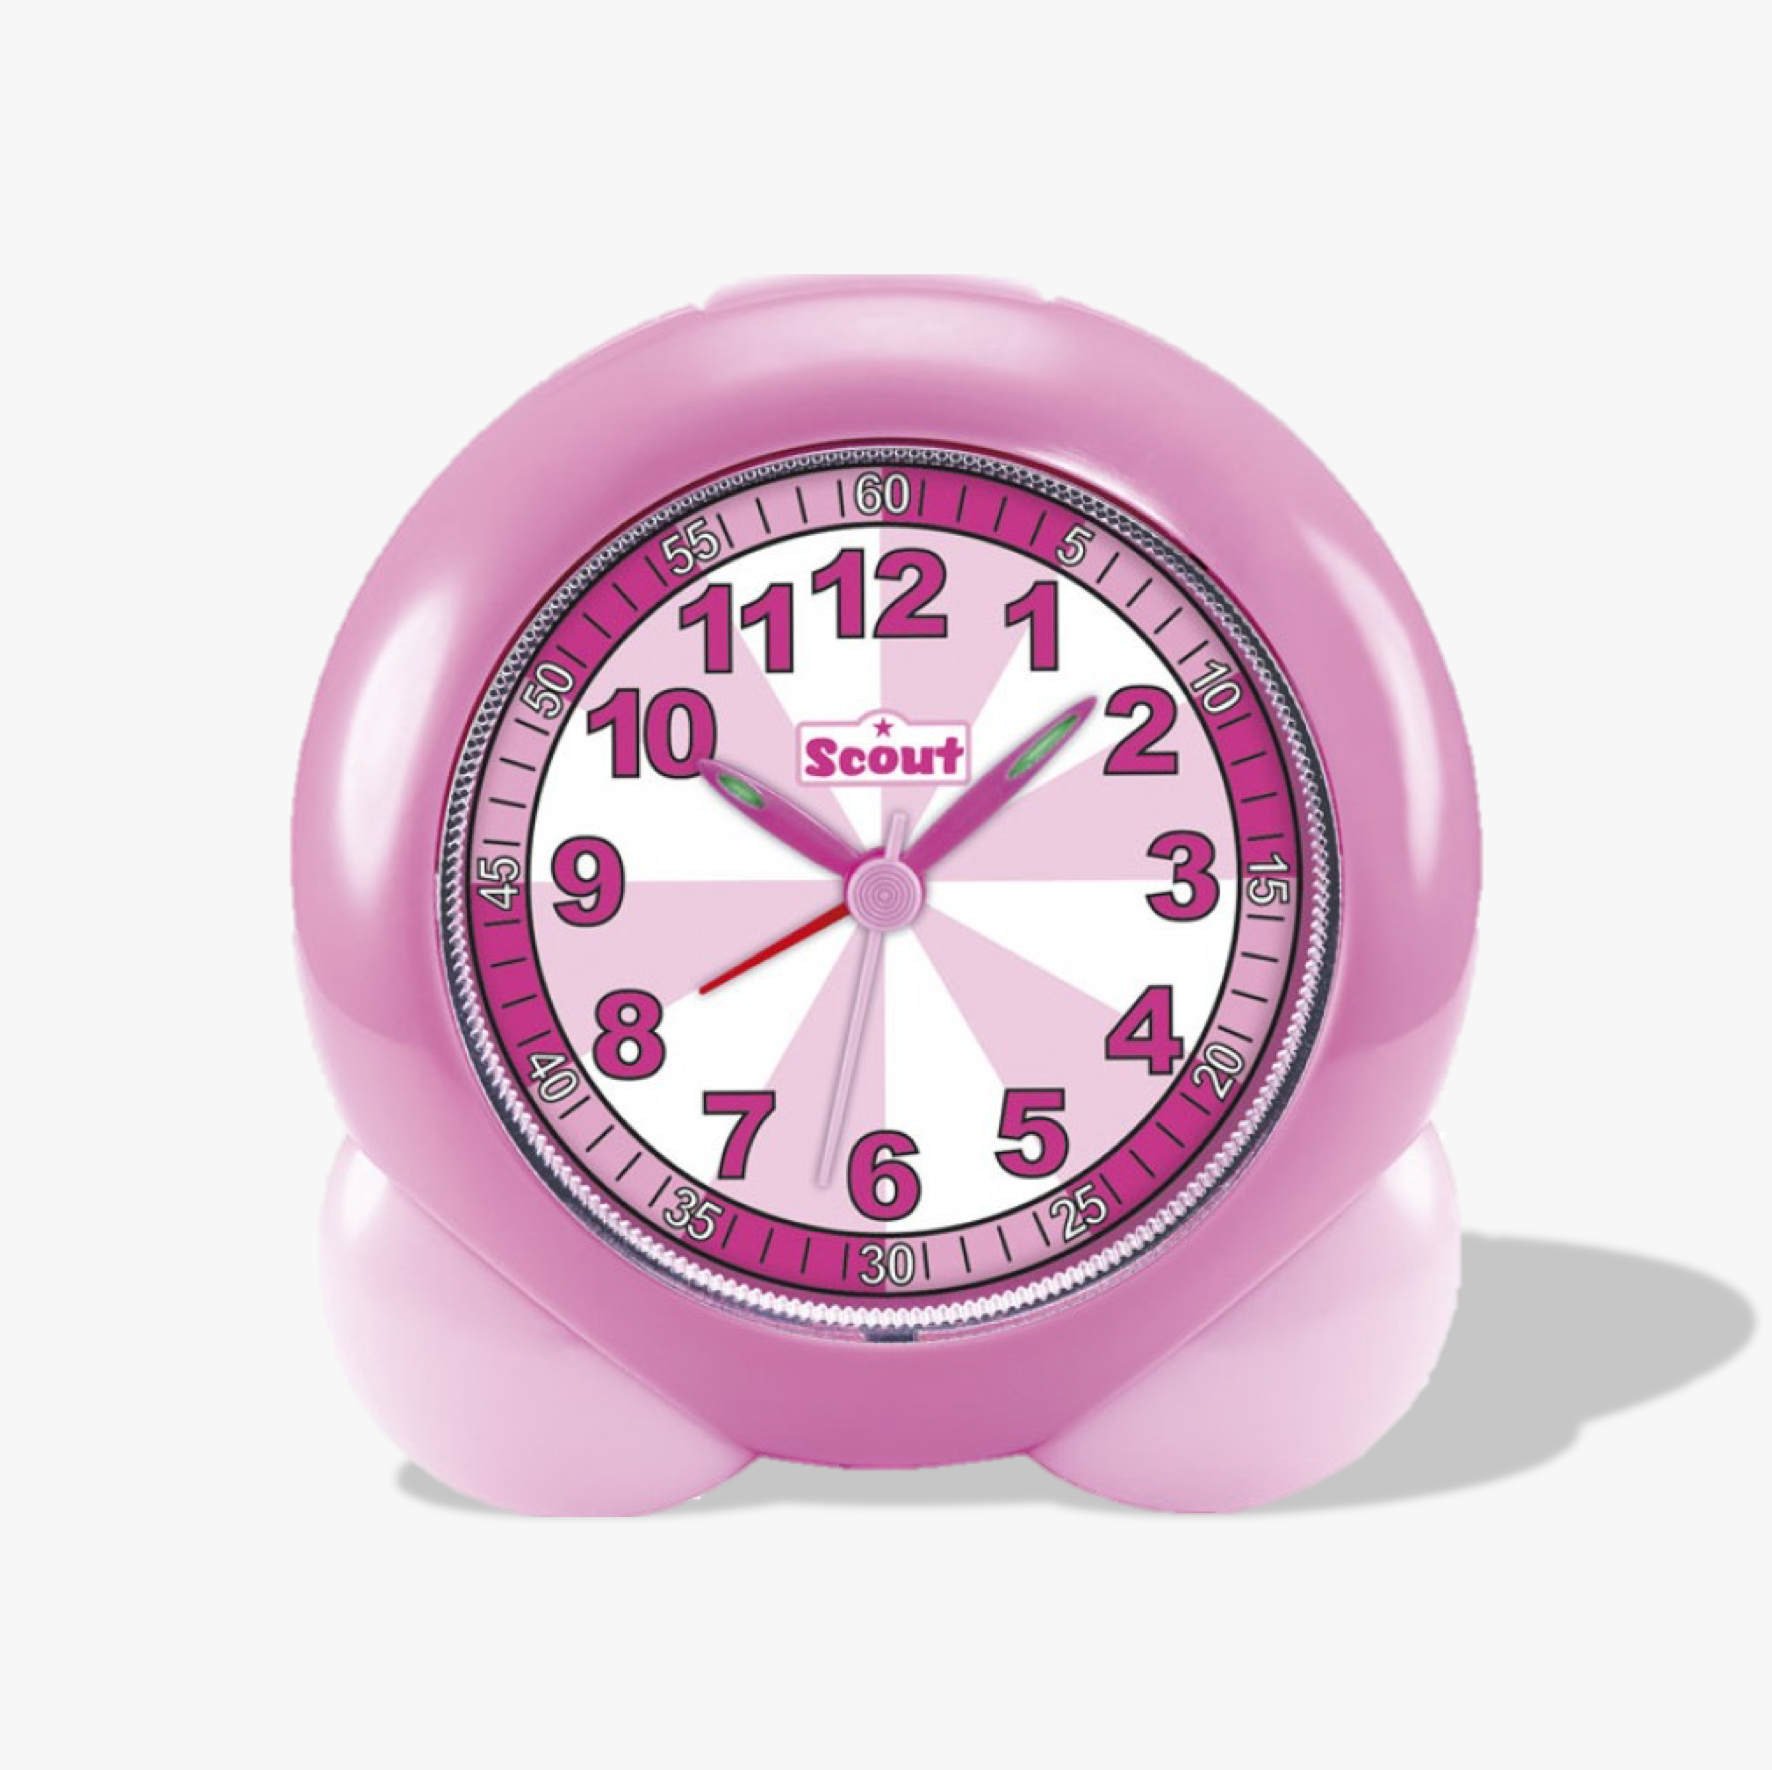 280001061 Children's alarm clock with dial lighting